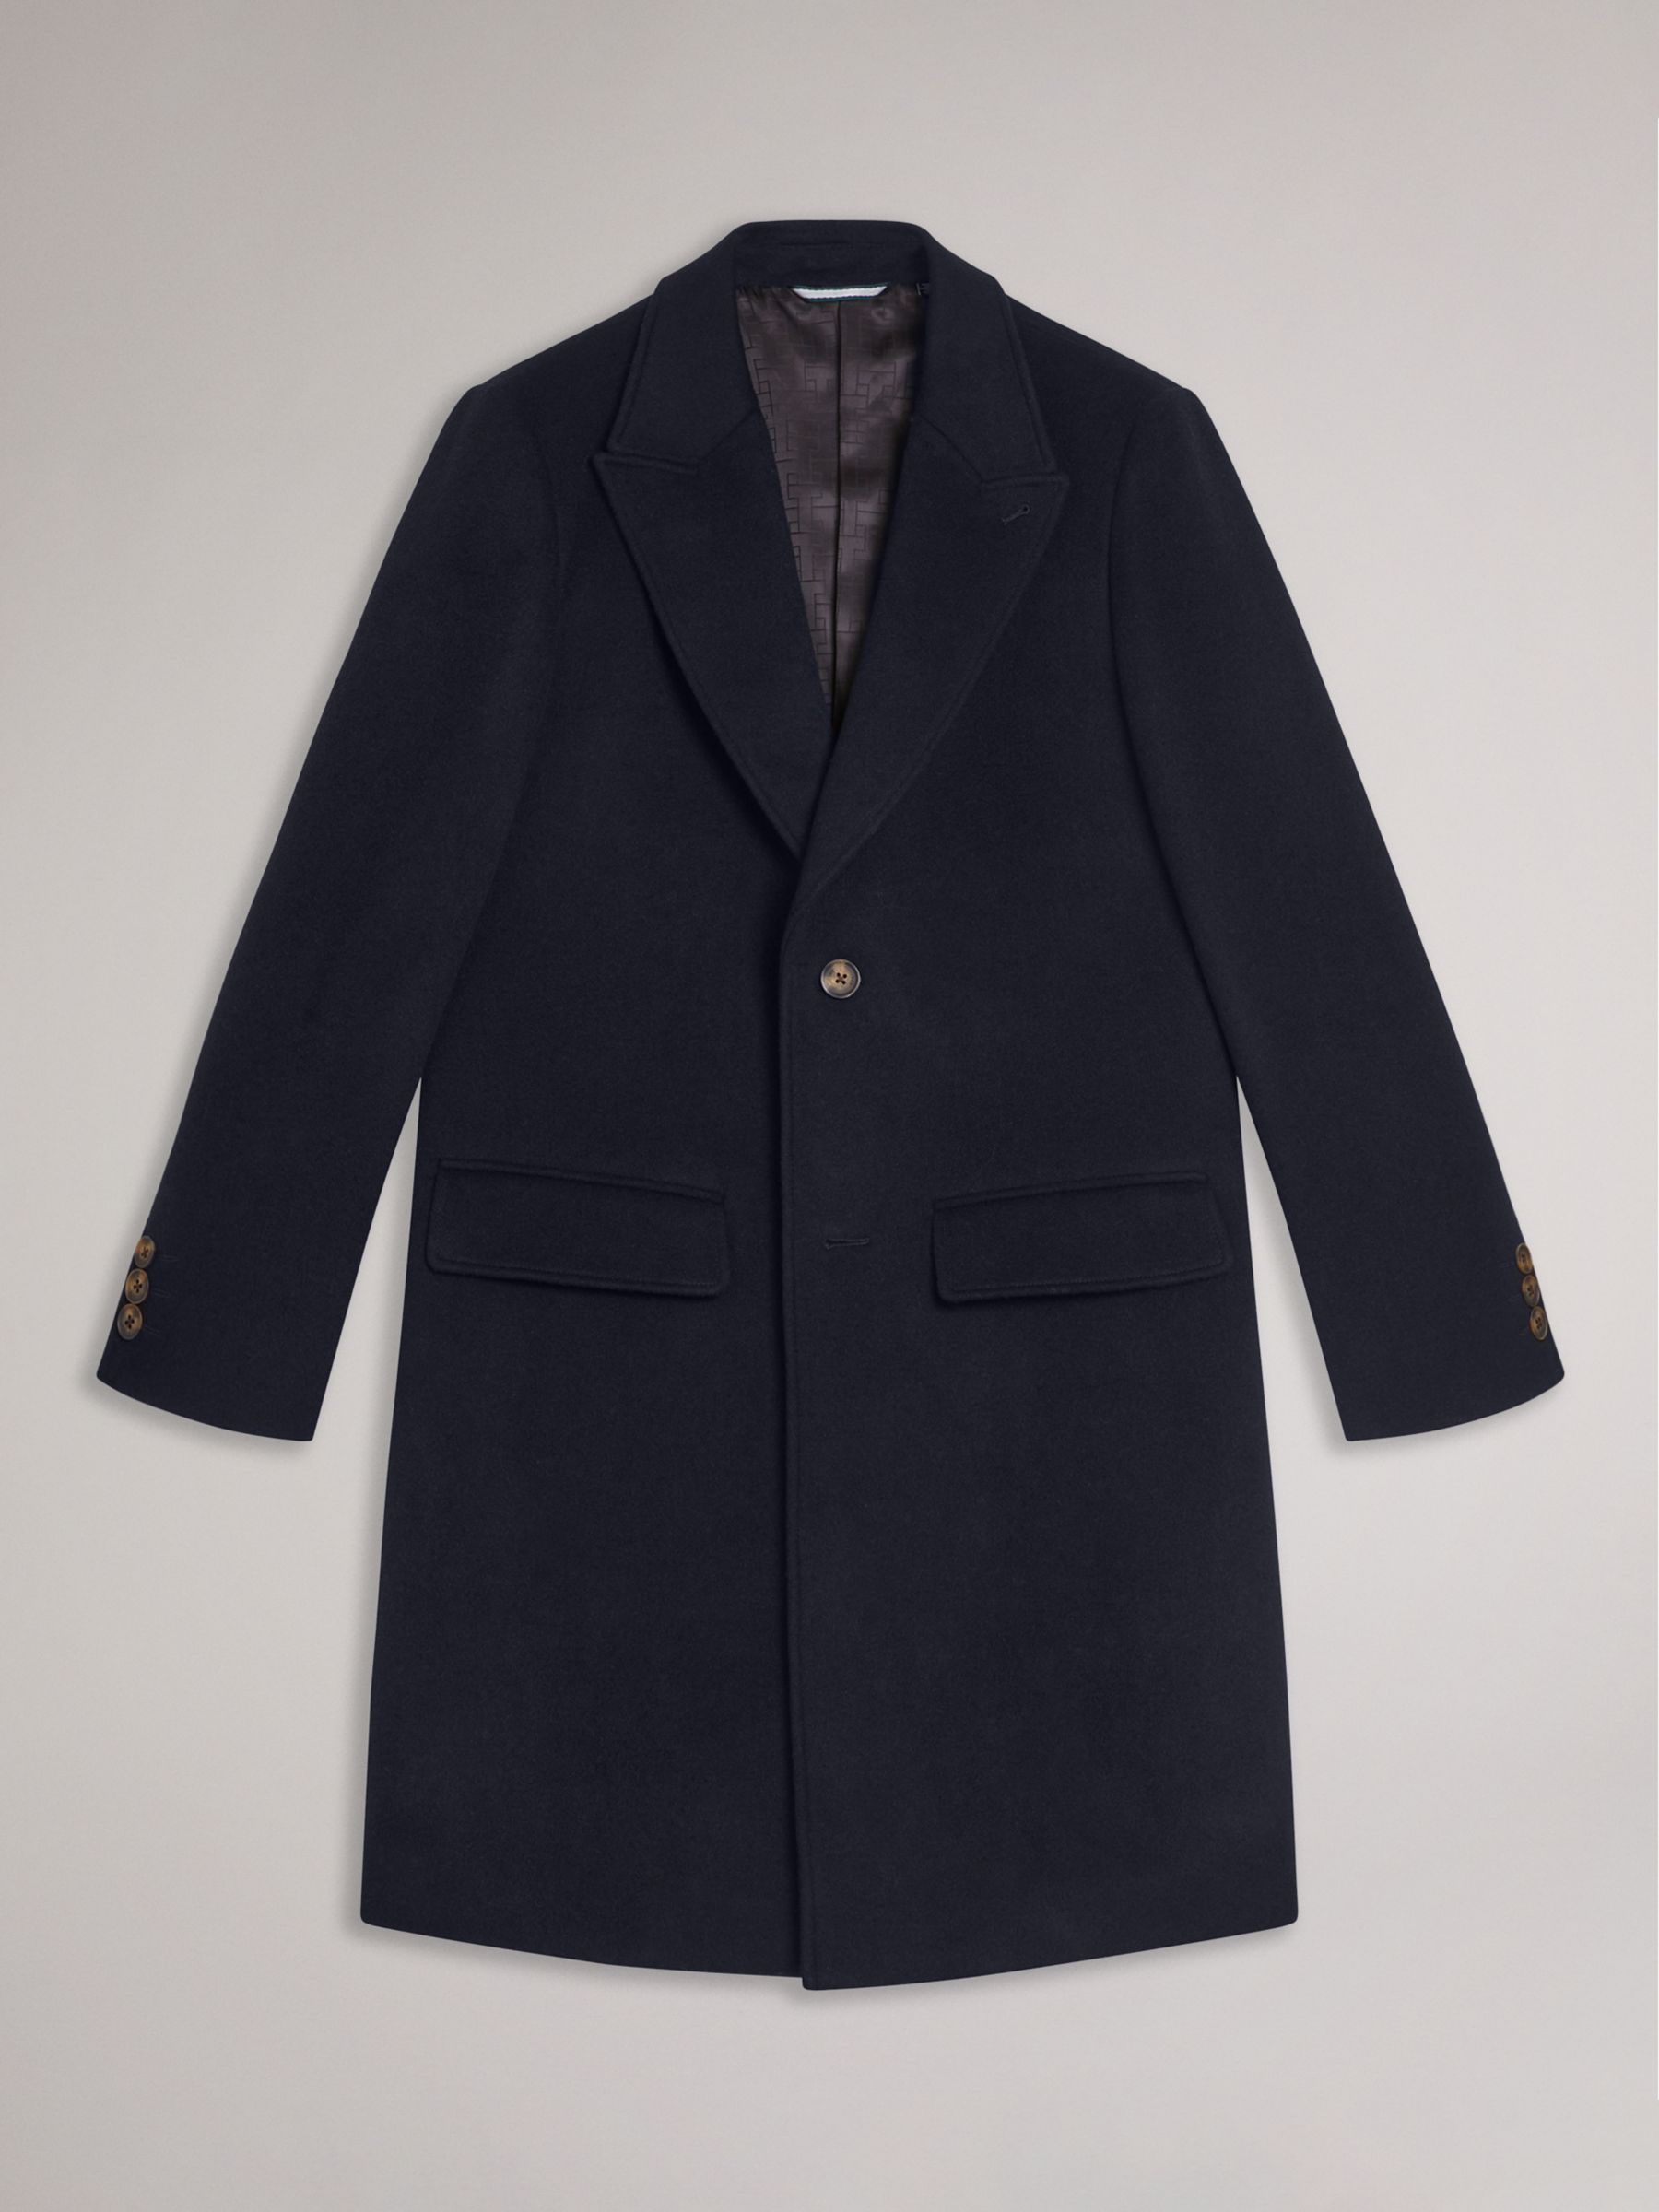 Ted Baker Wilding Wool Blend Overcoat, Blue Navy, S